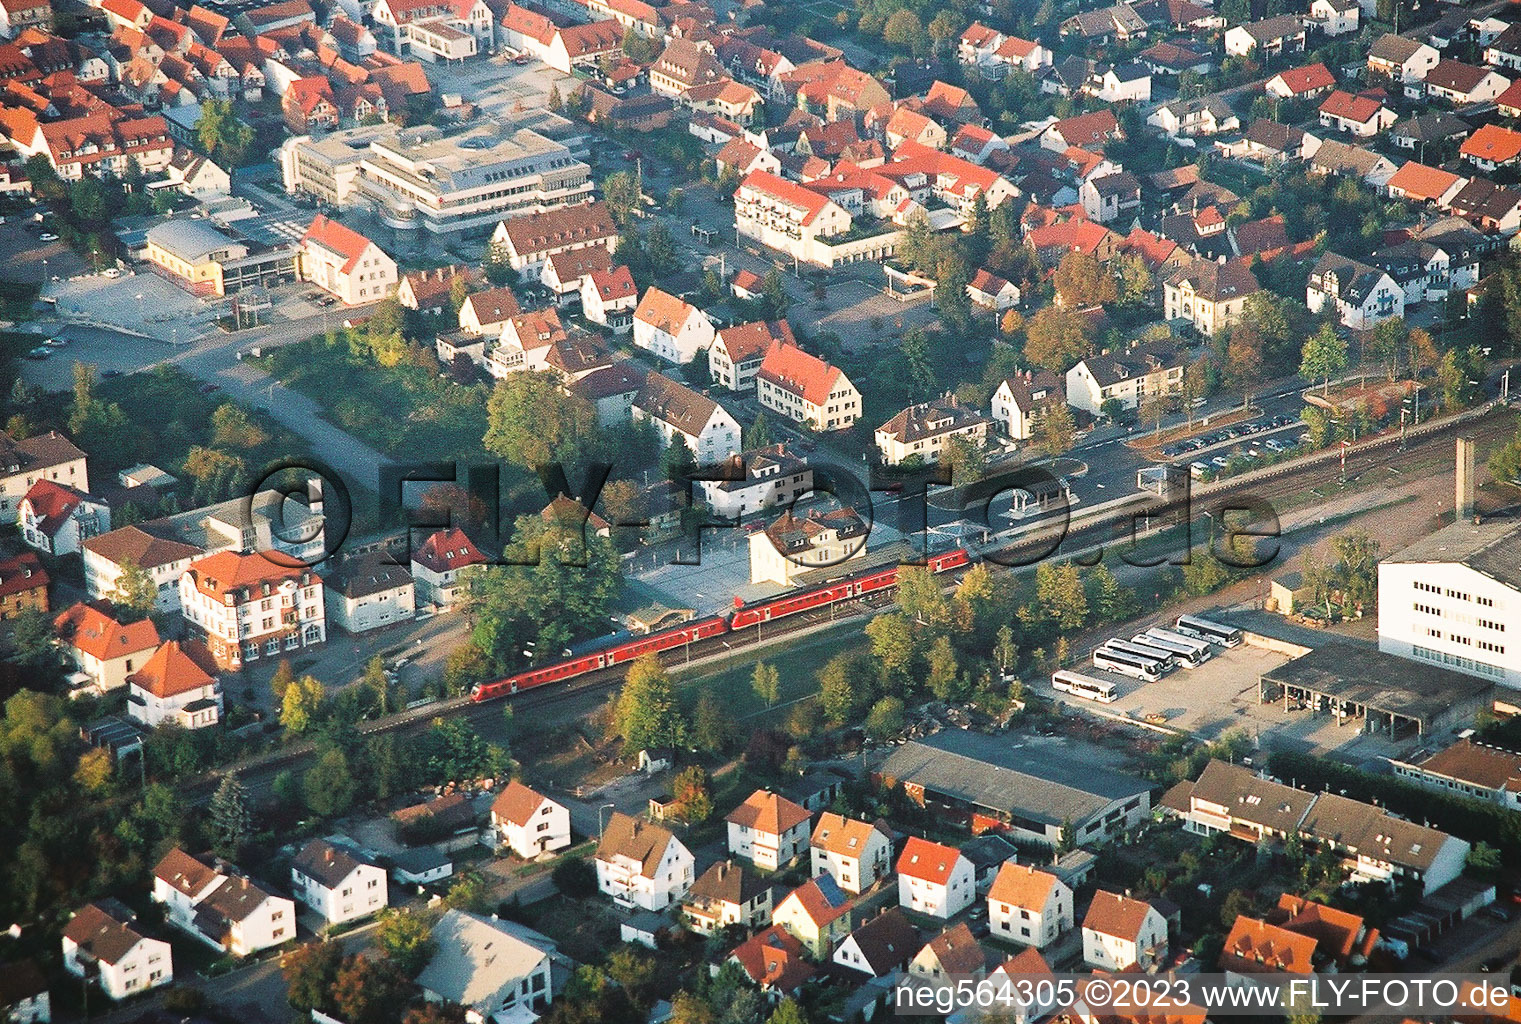 Train station Verbandsgemeinde Sparkasse in Kandel in the state Rhineland-Palatinate, Germany